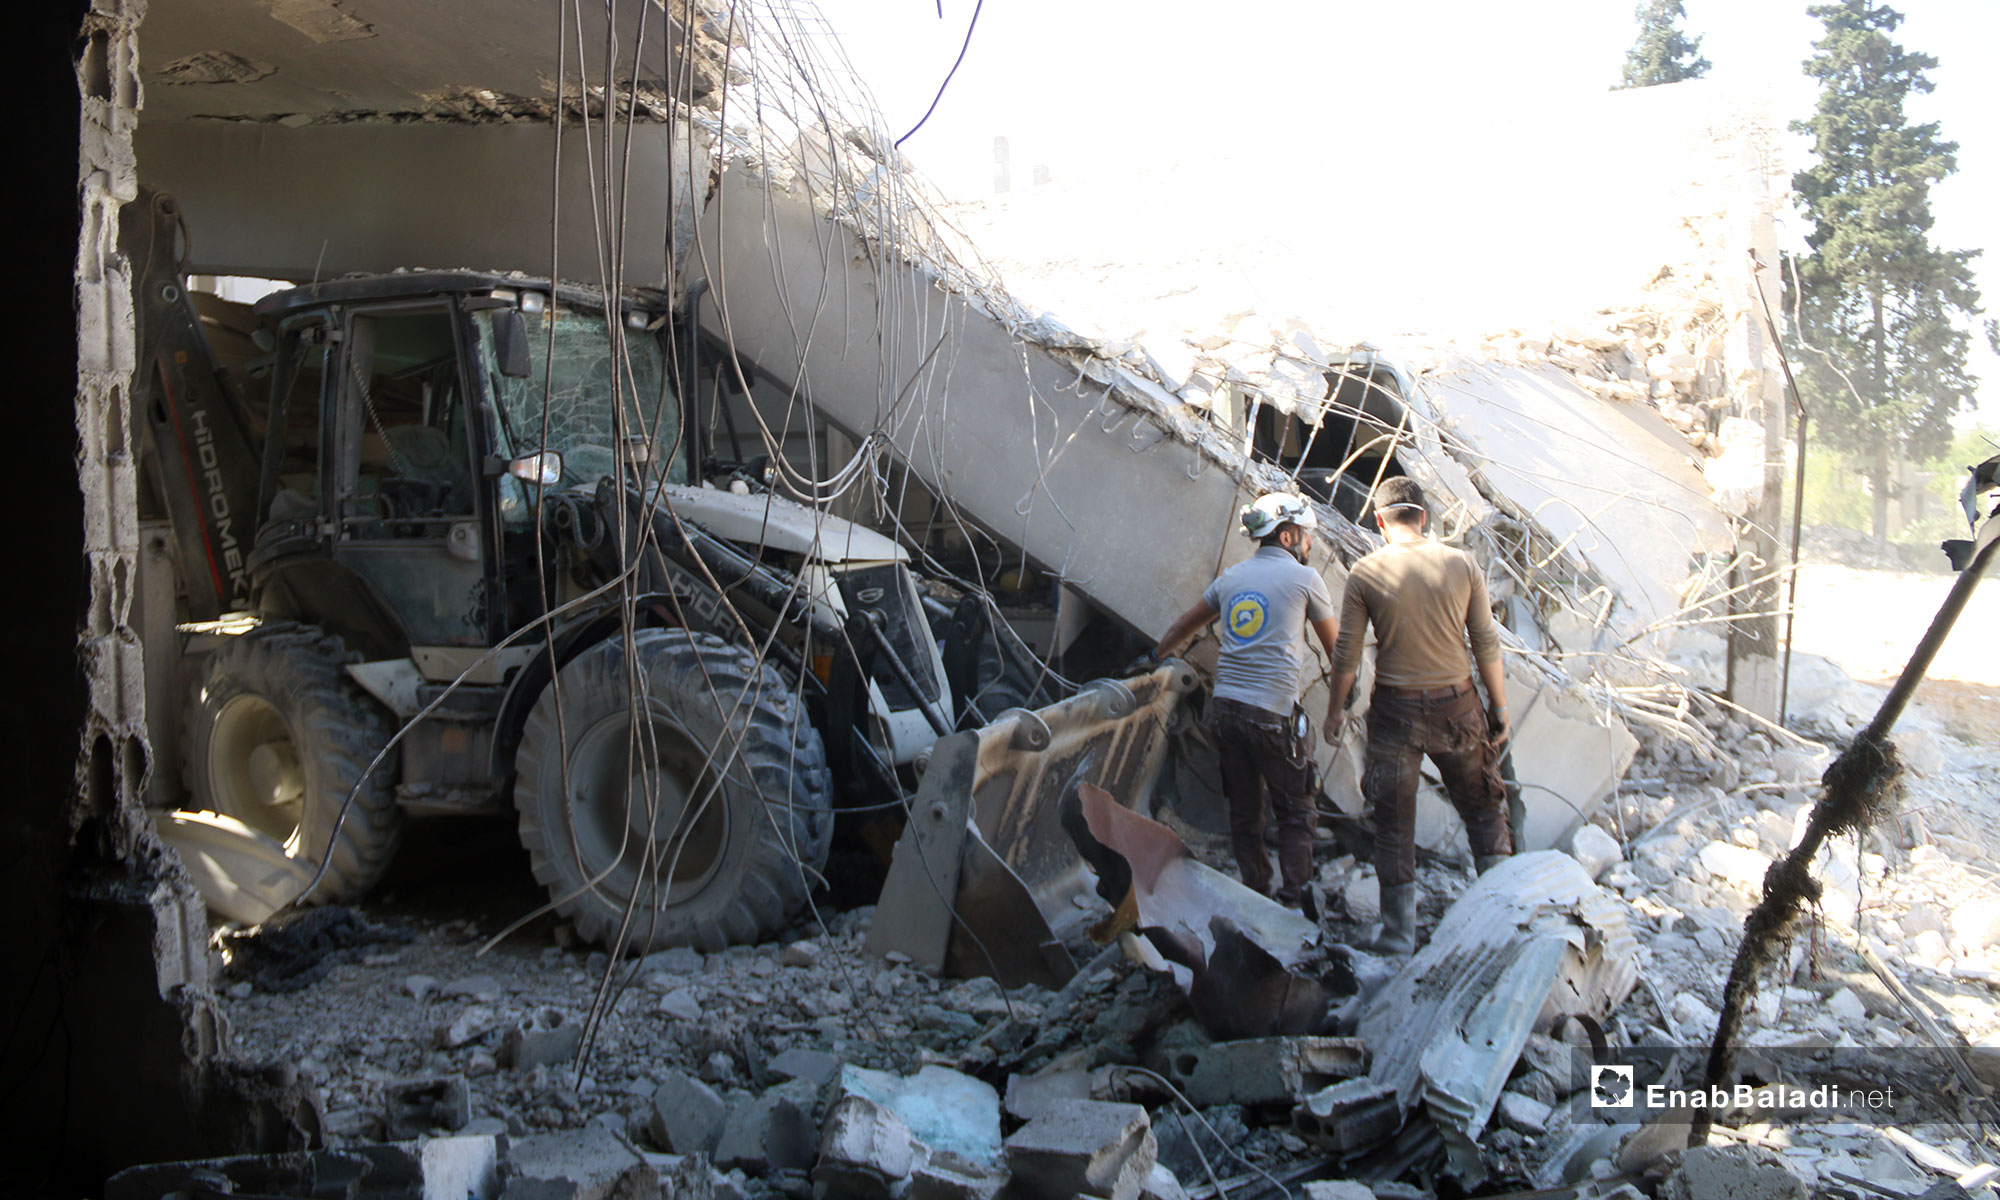 Destruction that befell the Civil Defense Center at the city of Kafr Nabl  - May 13, 2019 (Enab Baladi)